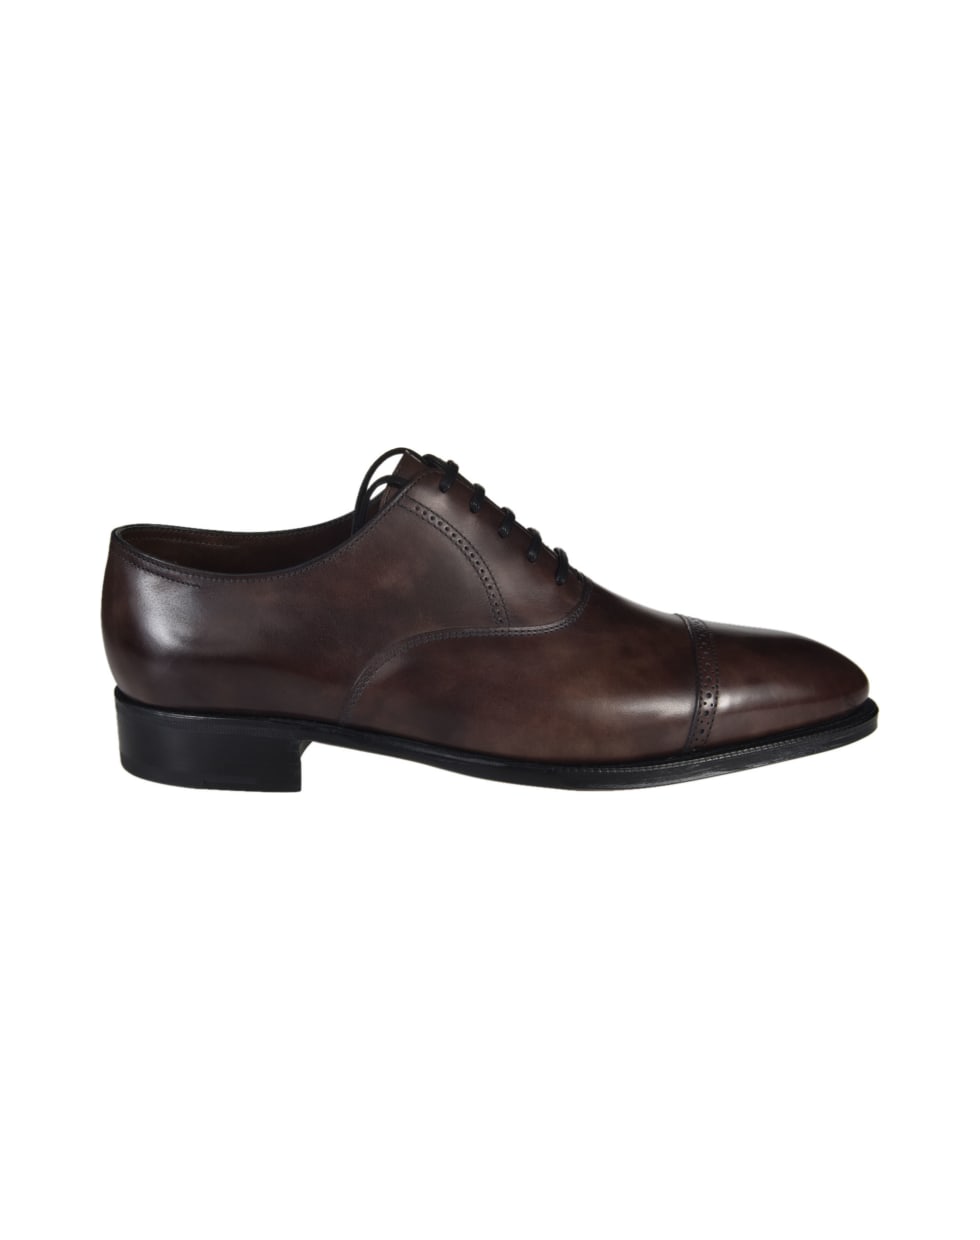 John Lobb Philip II Oxford Shoes - Brown